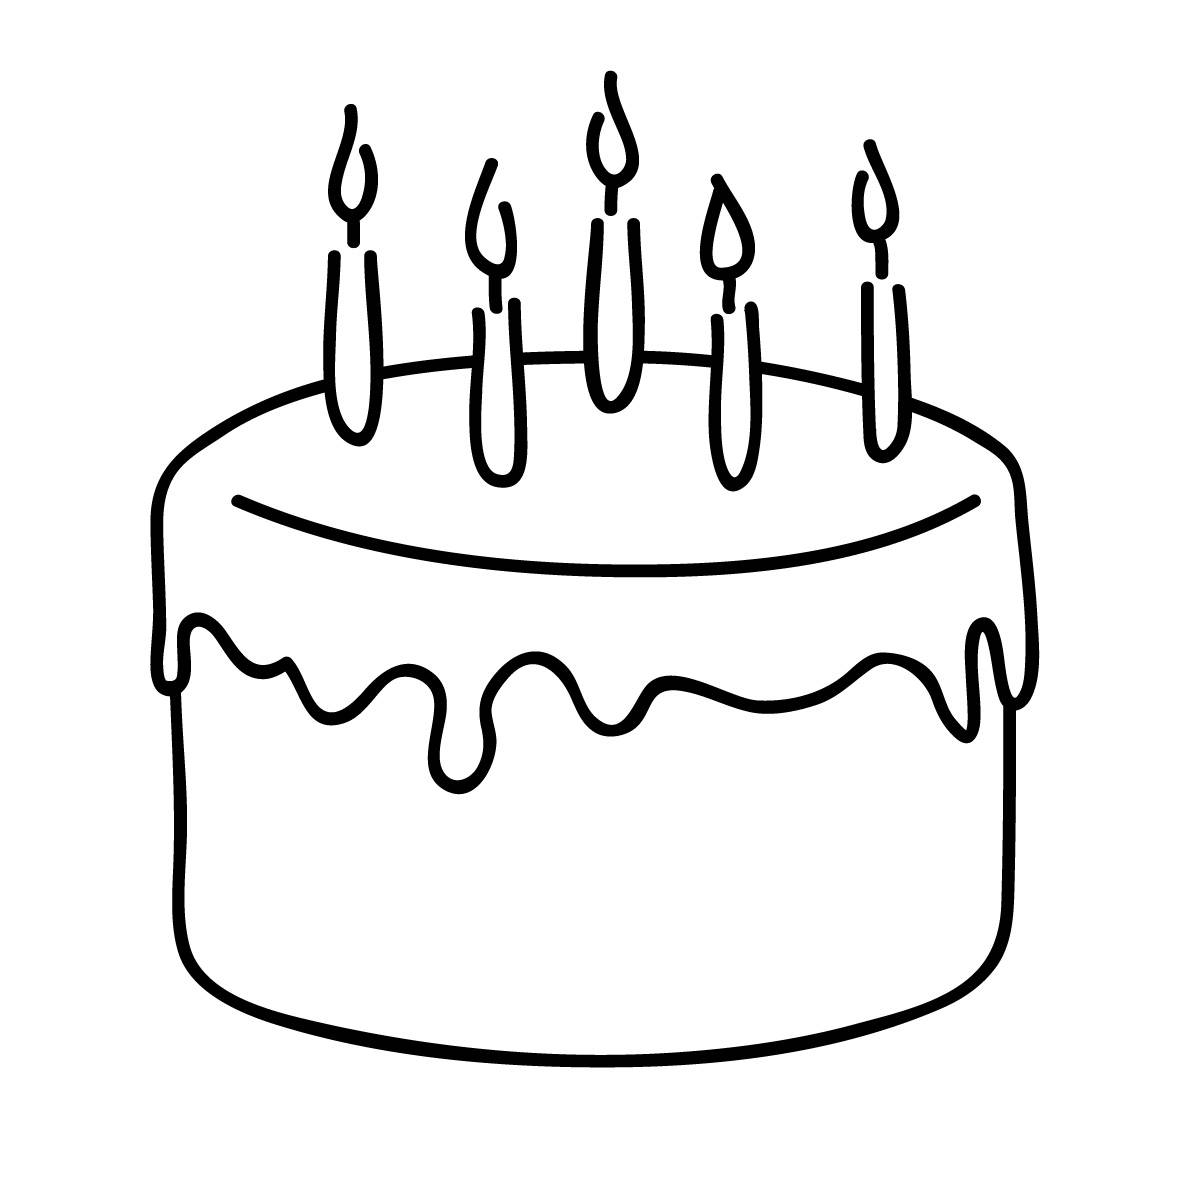 Happy birthday cake clipart black and white free